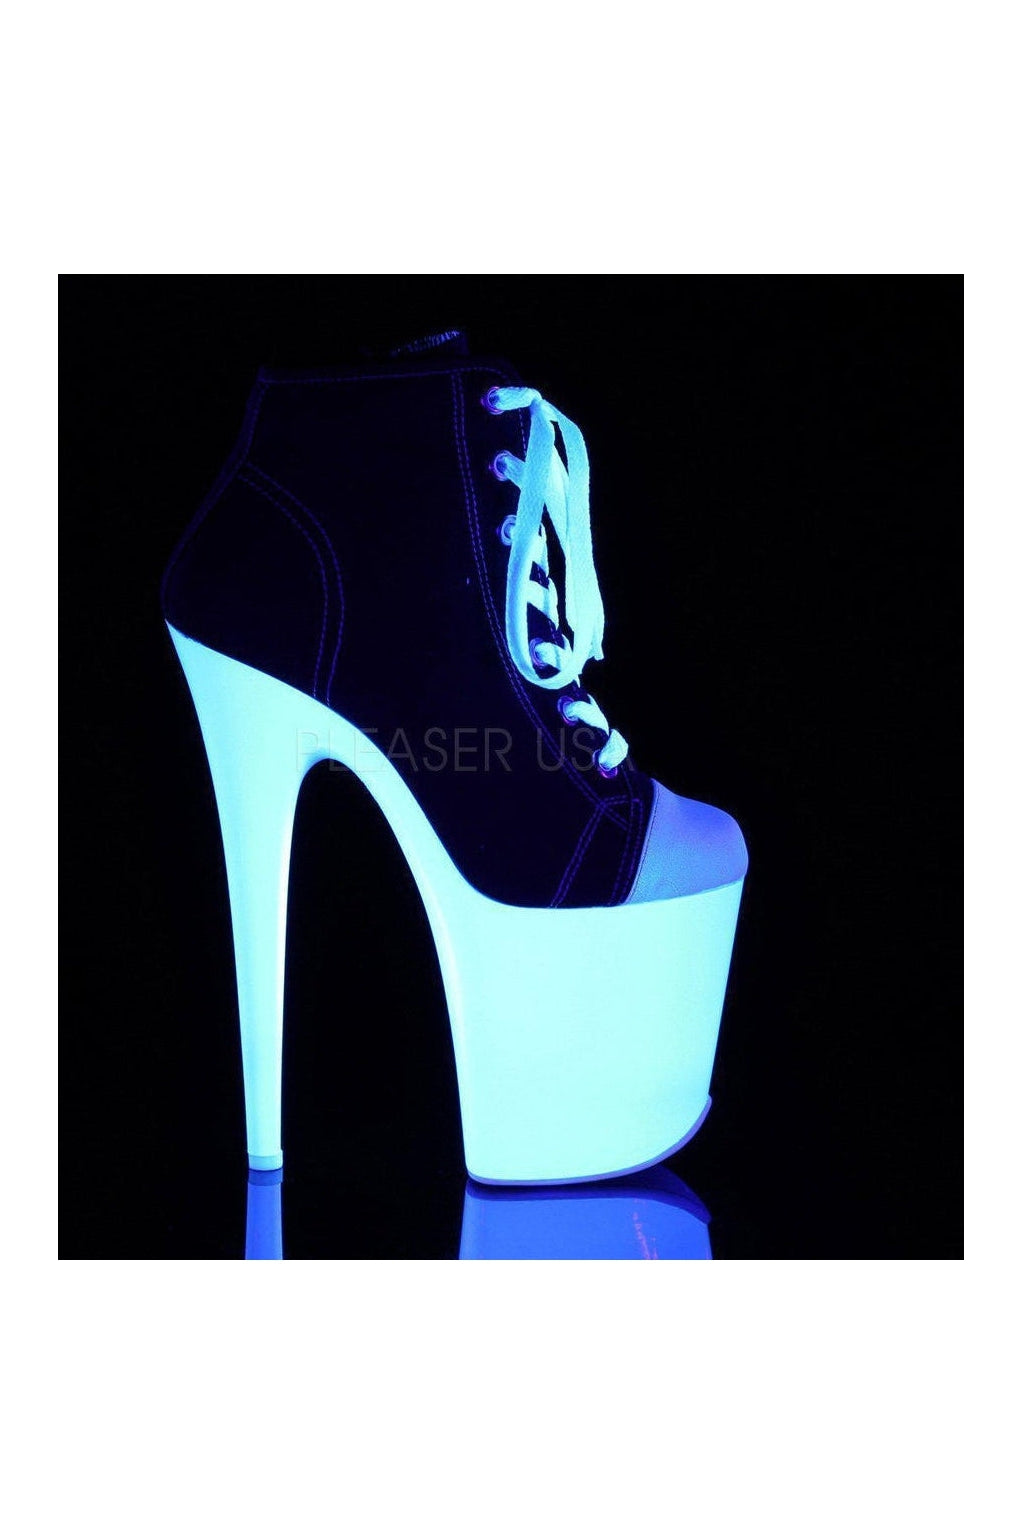 Pleaser Pumps Platform Stripper Shoes | Buy at Sexyshoes.com